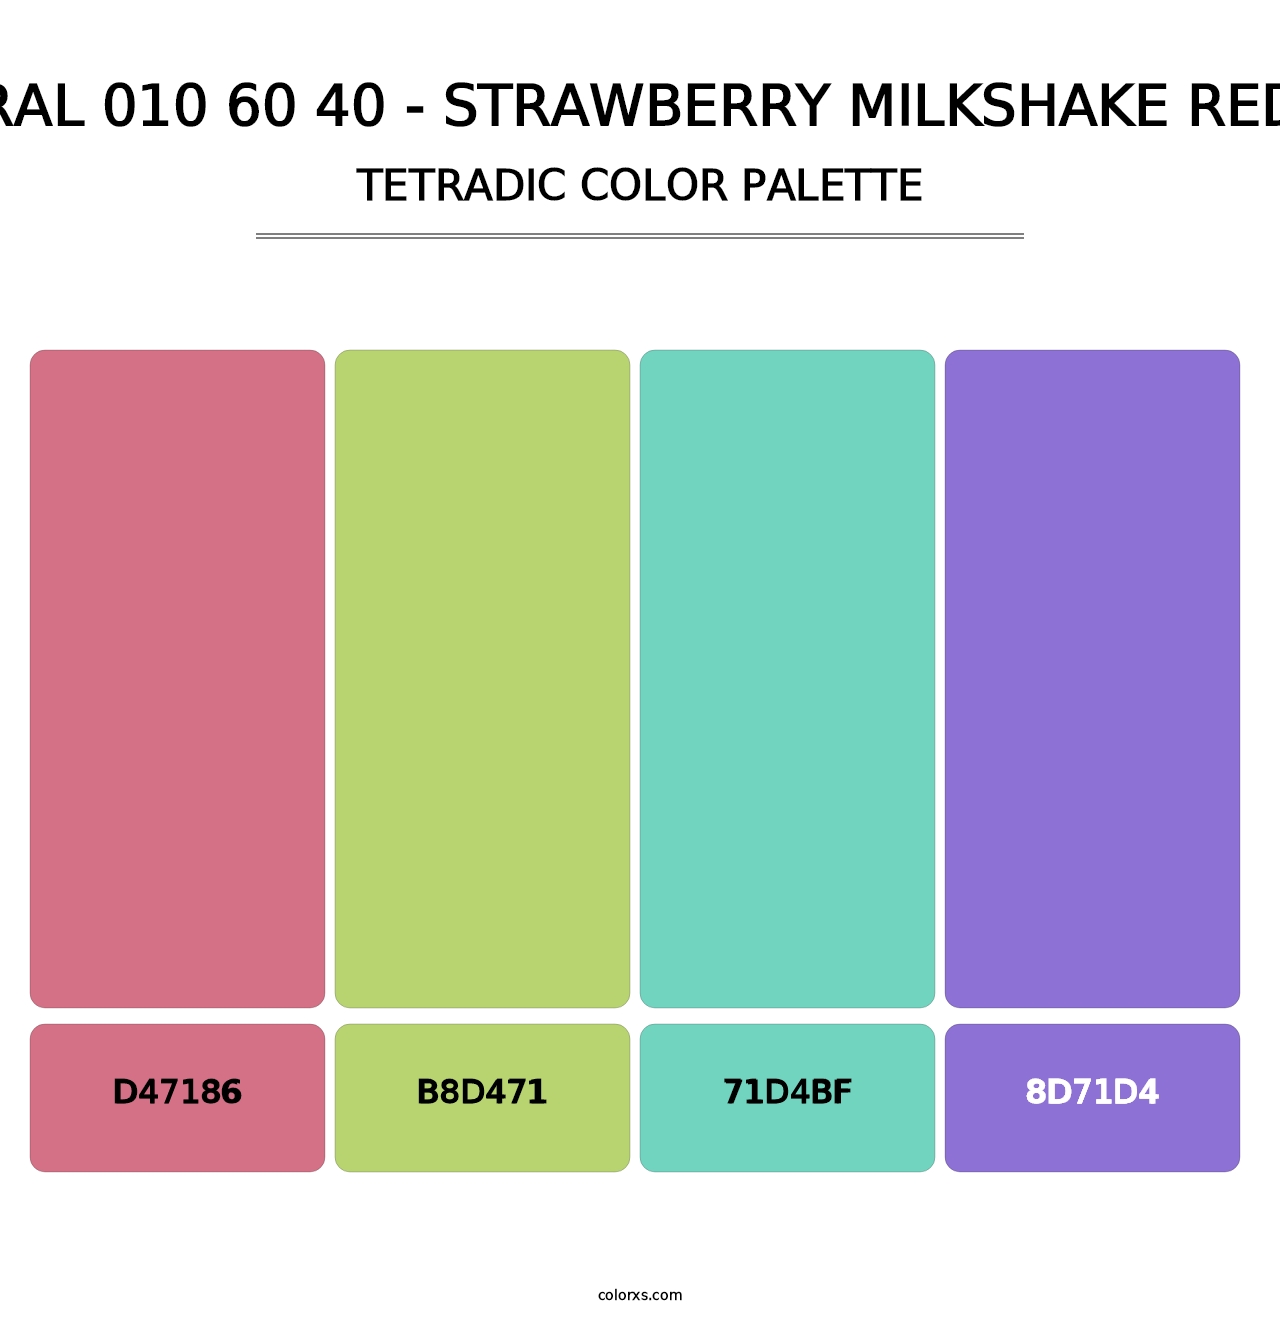 RAL 010 60 40 - Strawberry Milkshake Red - Tetradic Color Palette